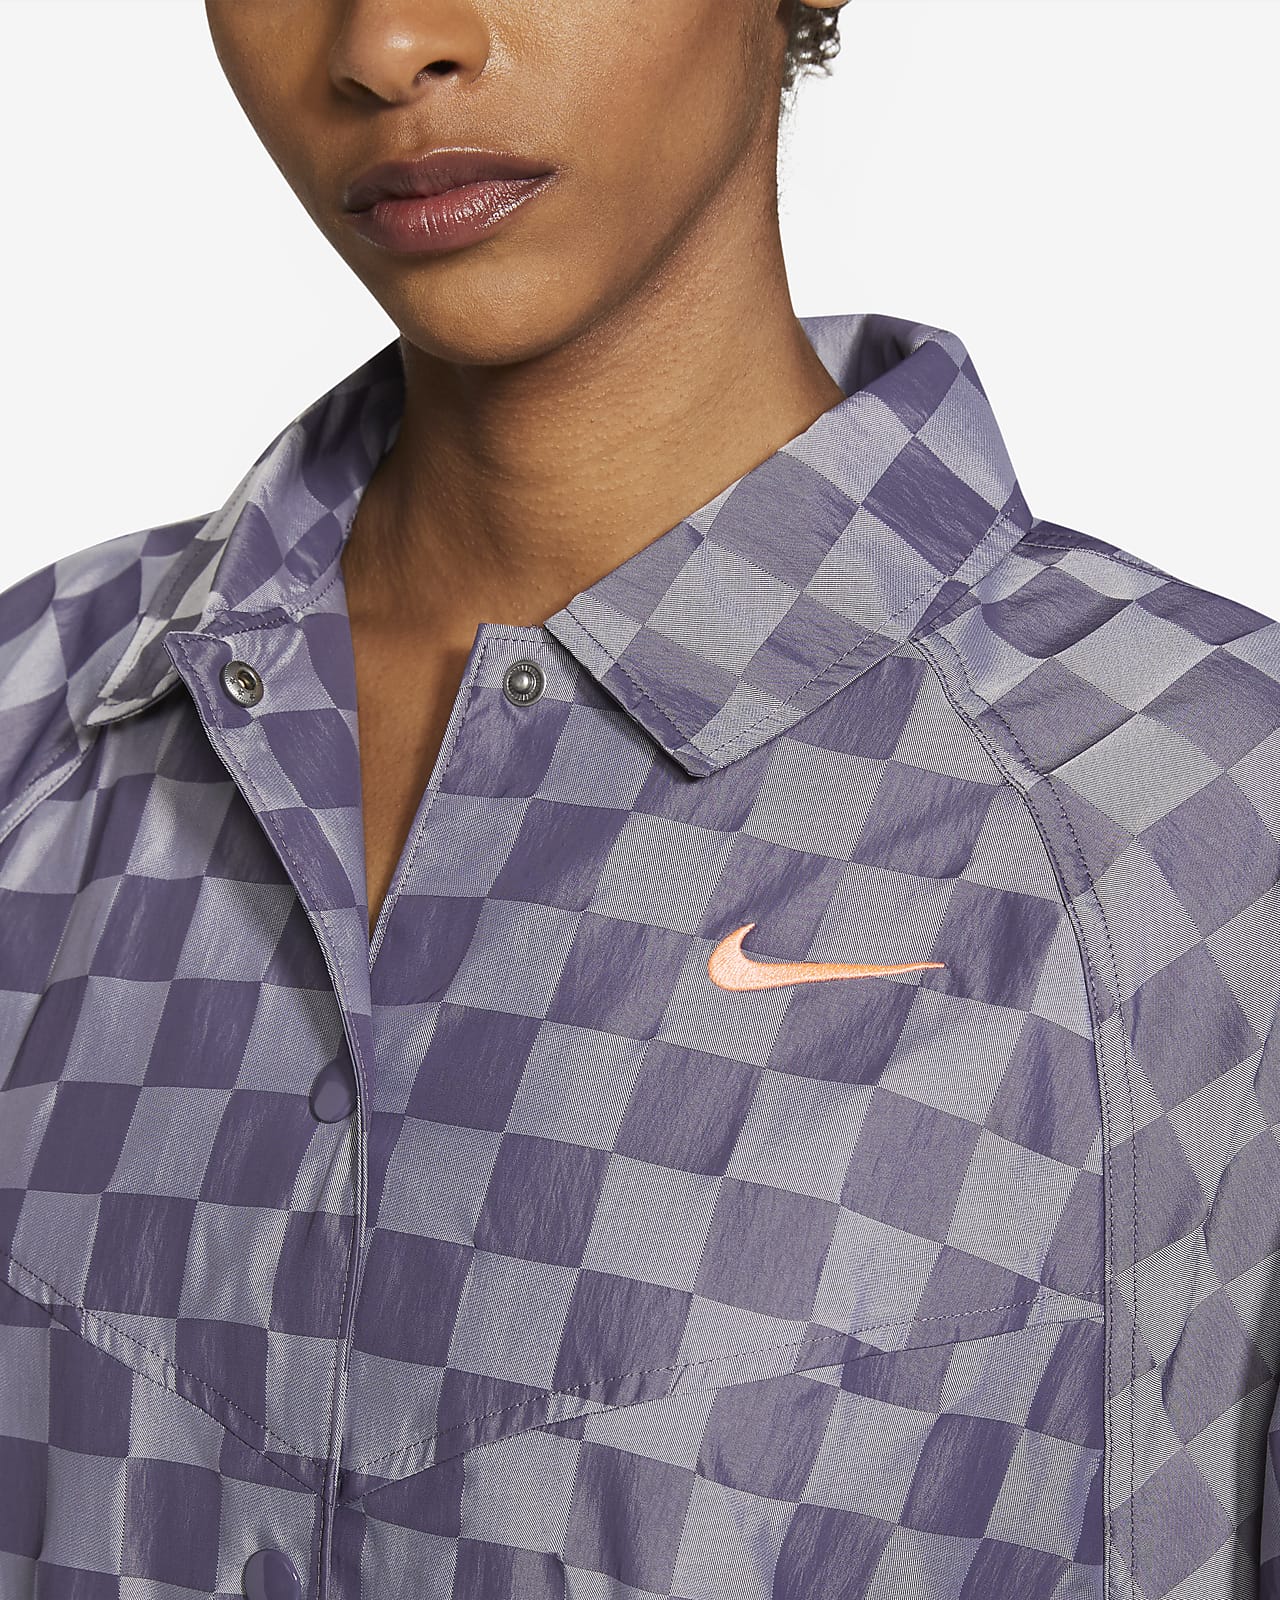 Opeenvolgend Onzin glas Nike Sportswear Icon Clash Women's Coaches' Jacket. Nike.com